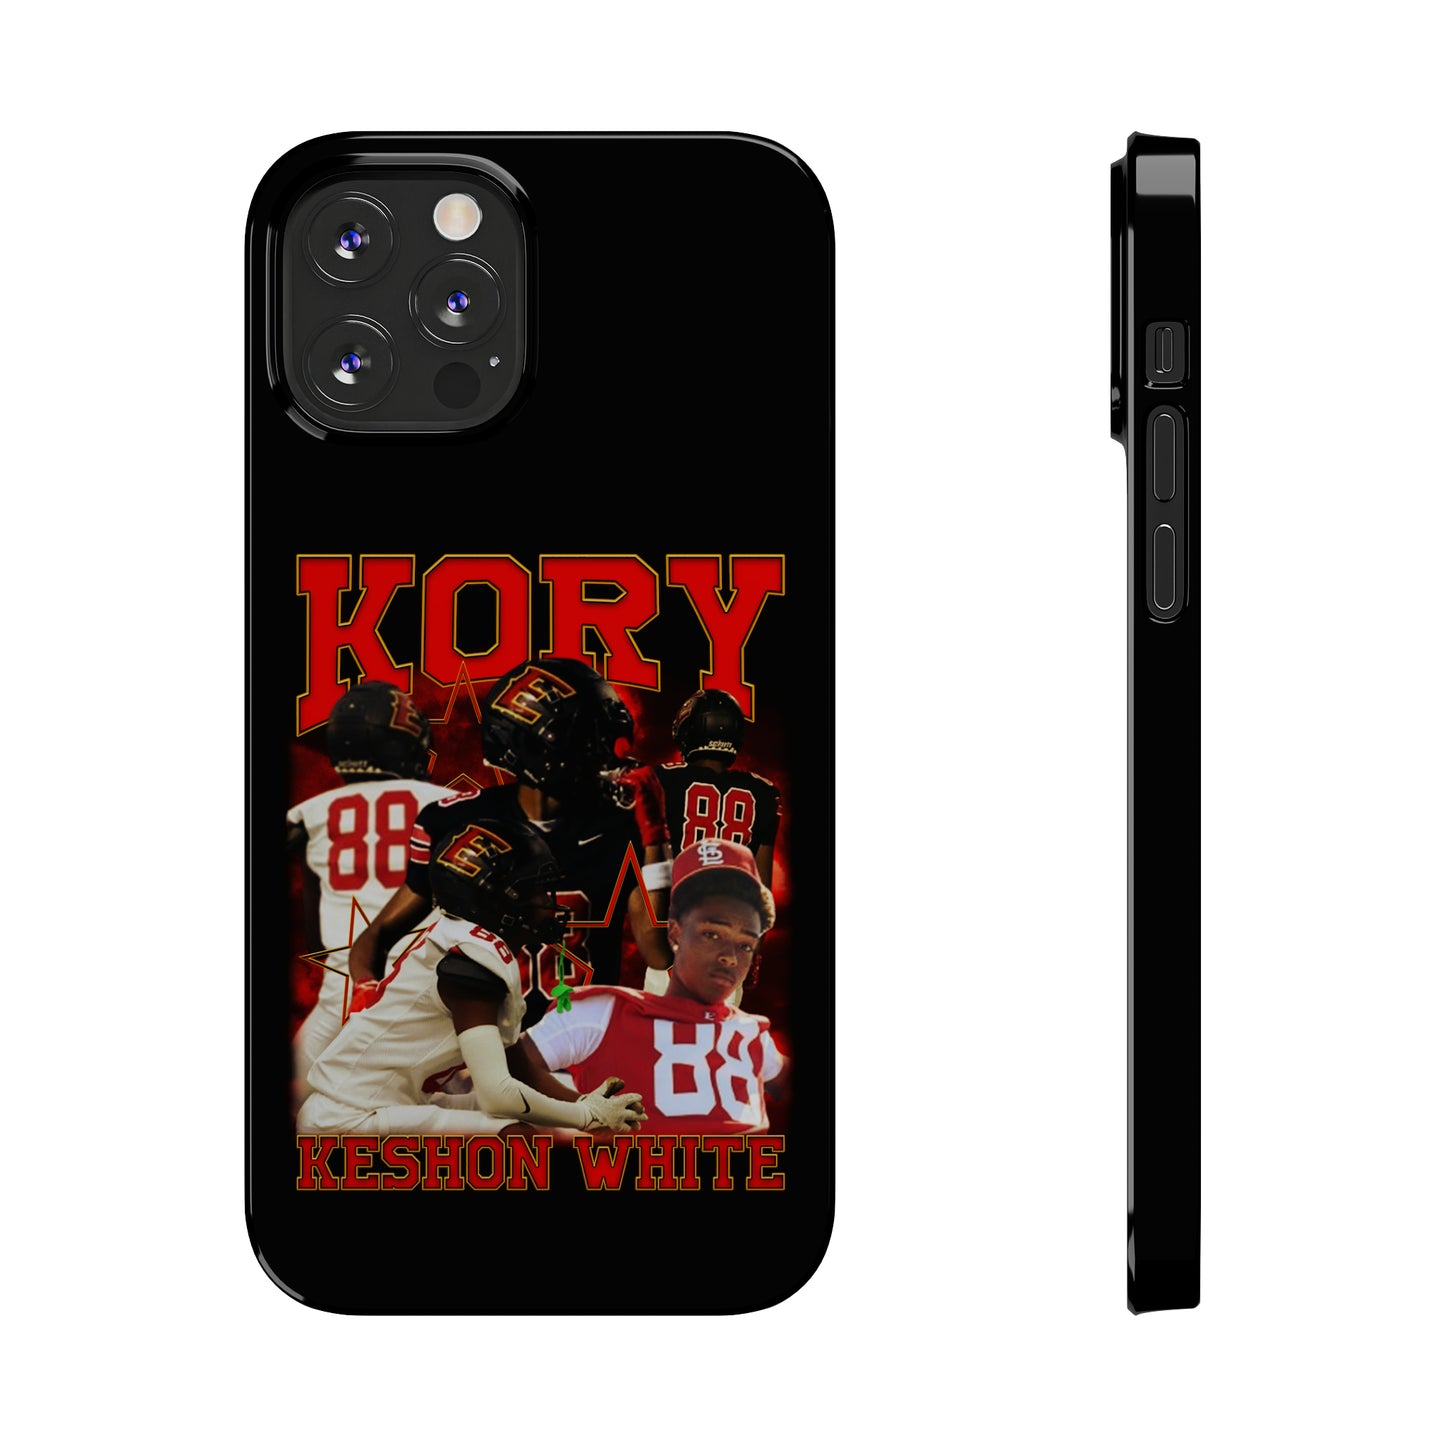 Kory Keshon White Phone Case